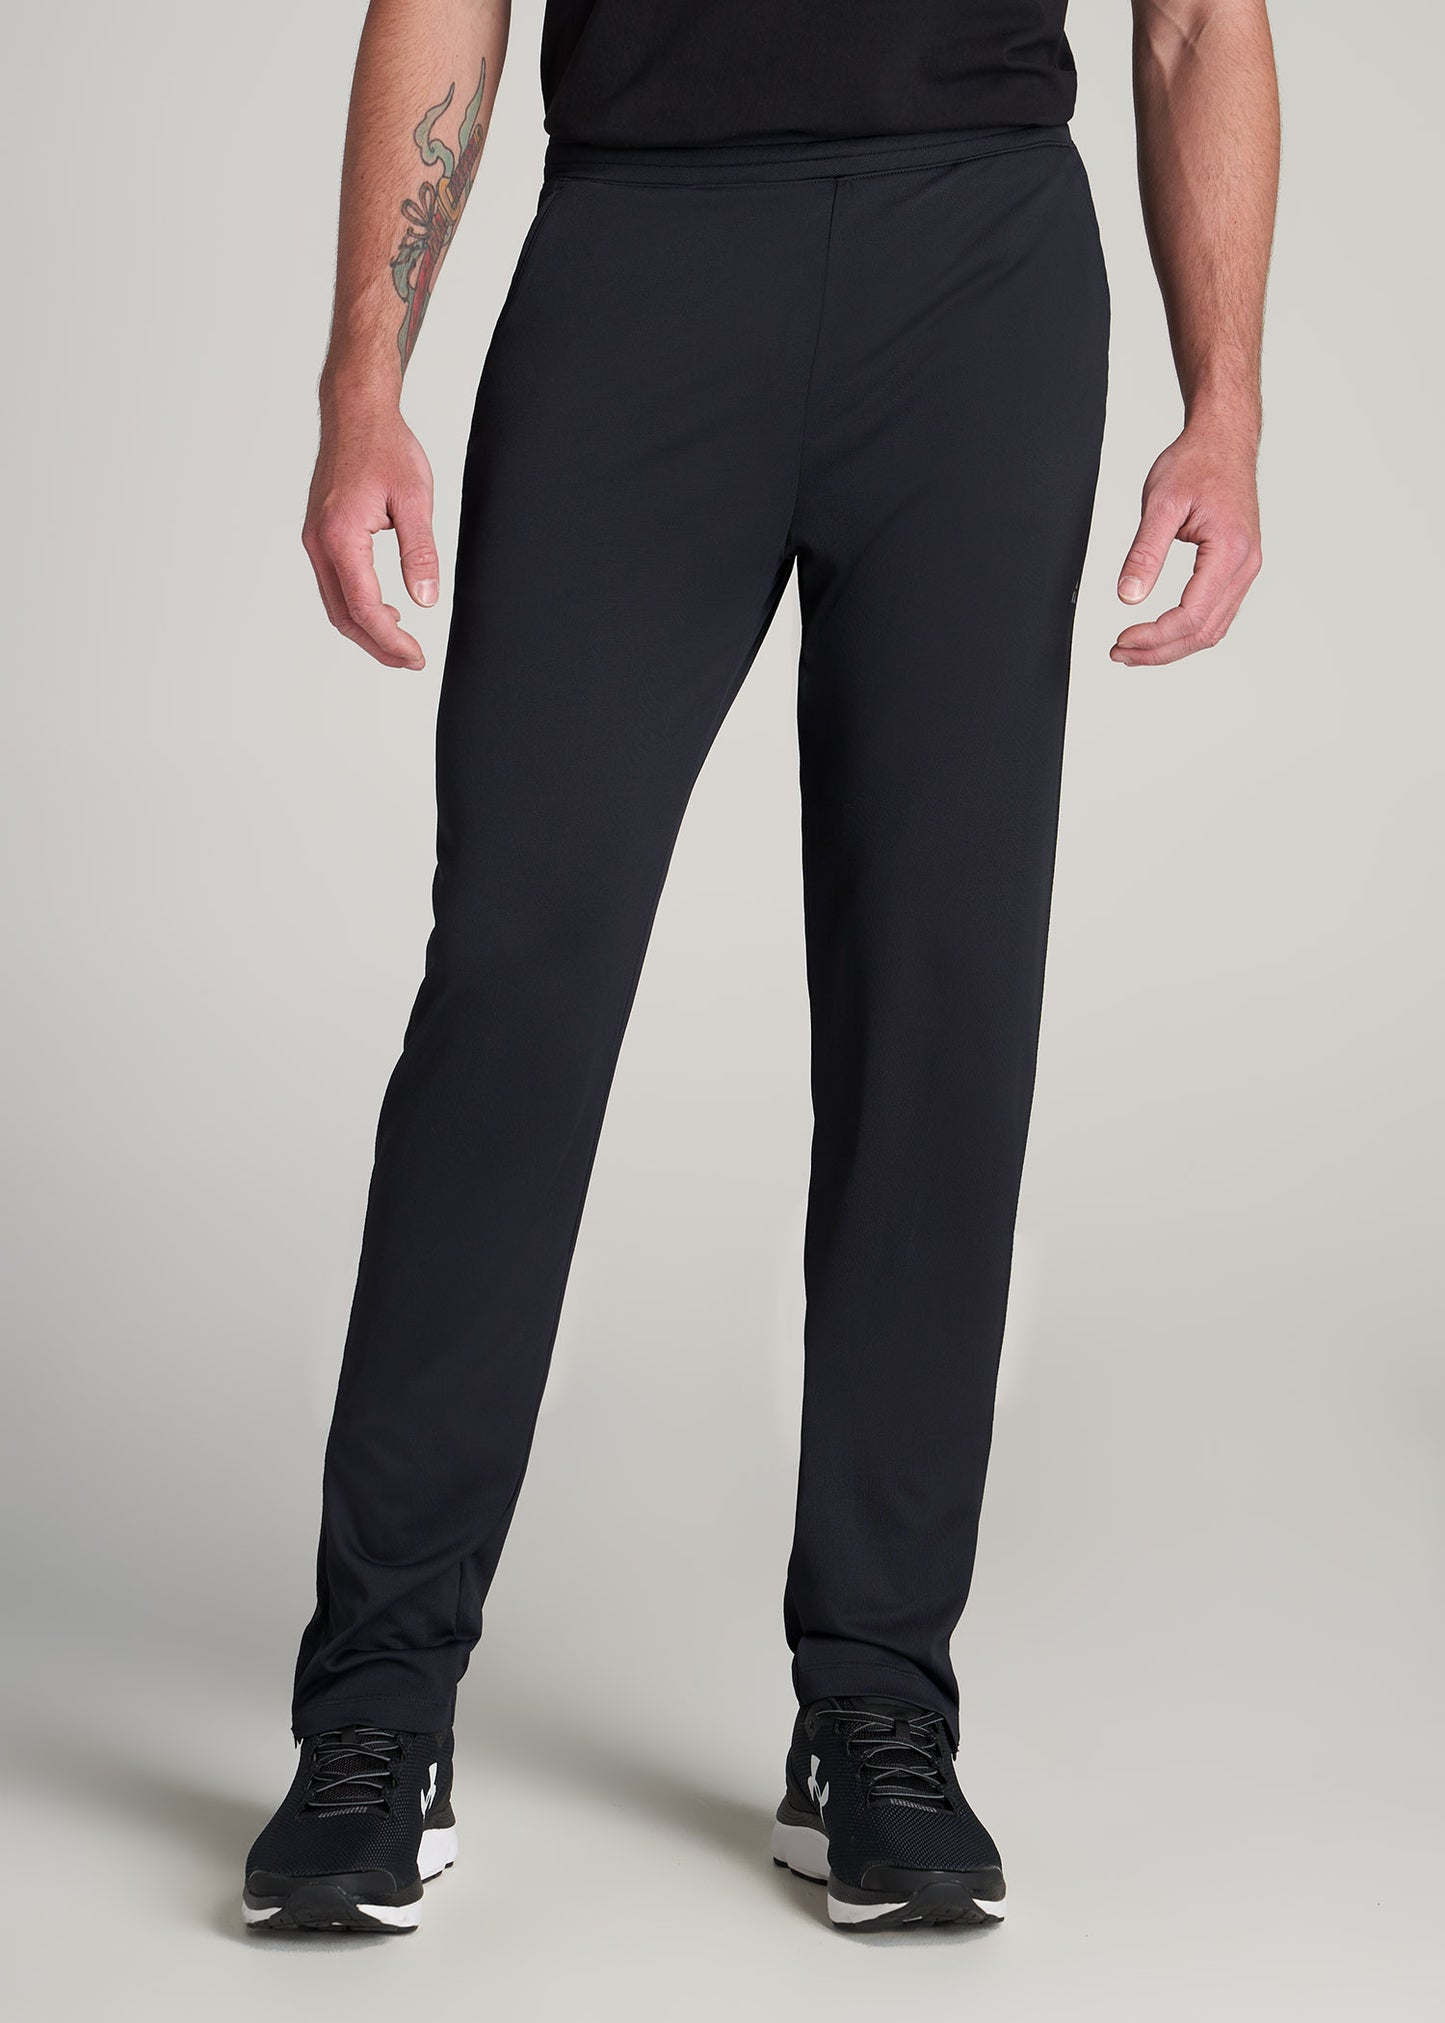 Men's Tall Zip Bottom A.T. Performance Pant Black | American Tall